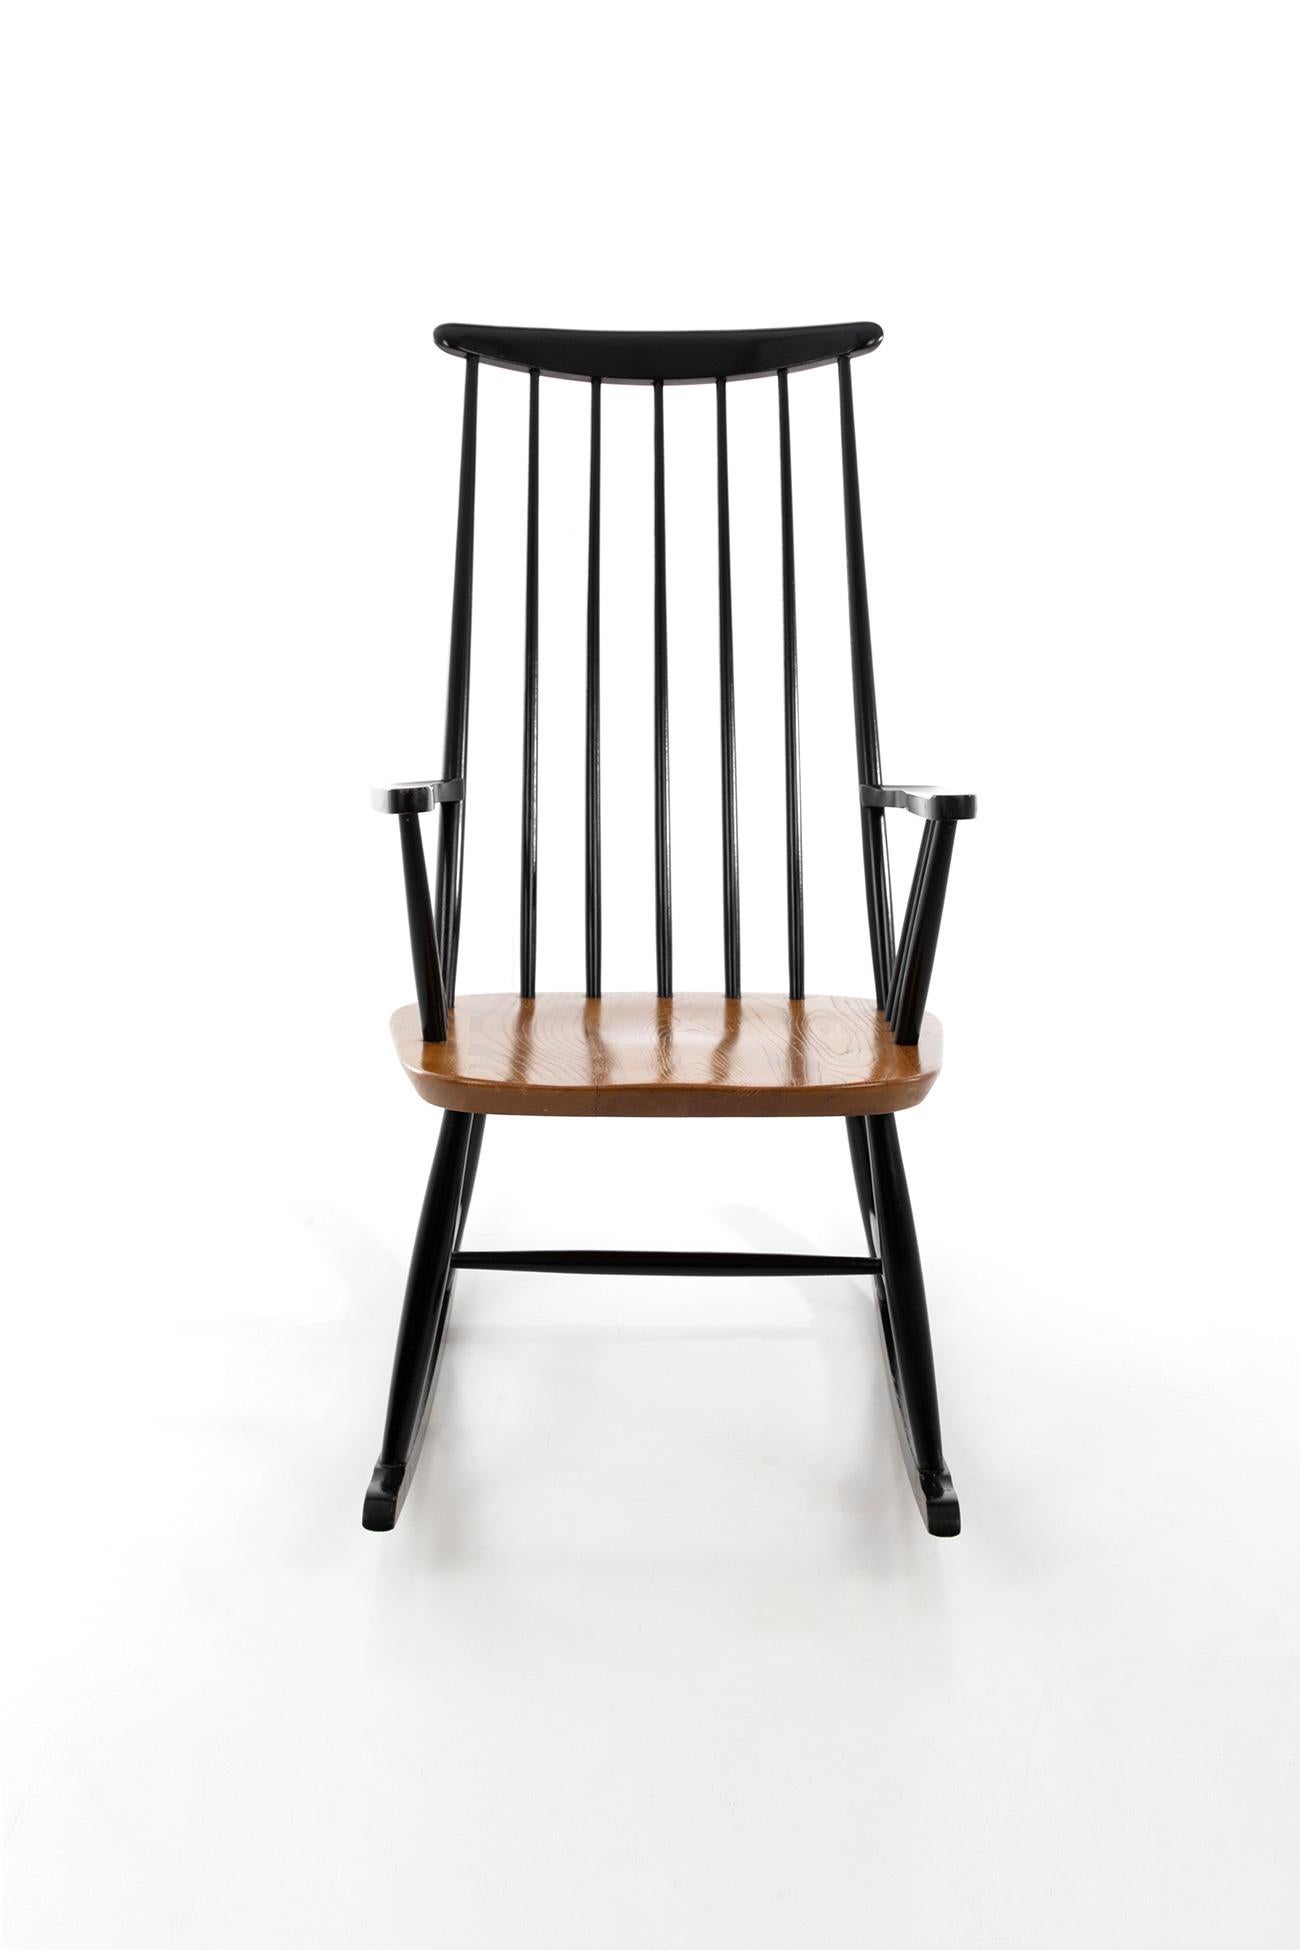 tapiovaara rocking chair